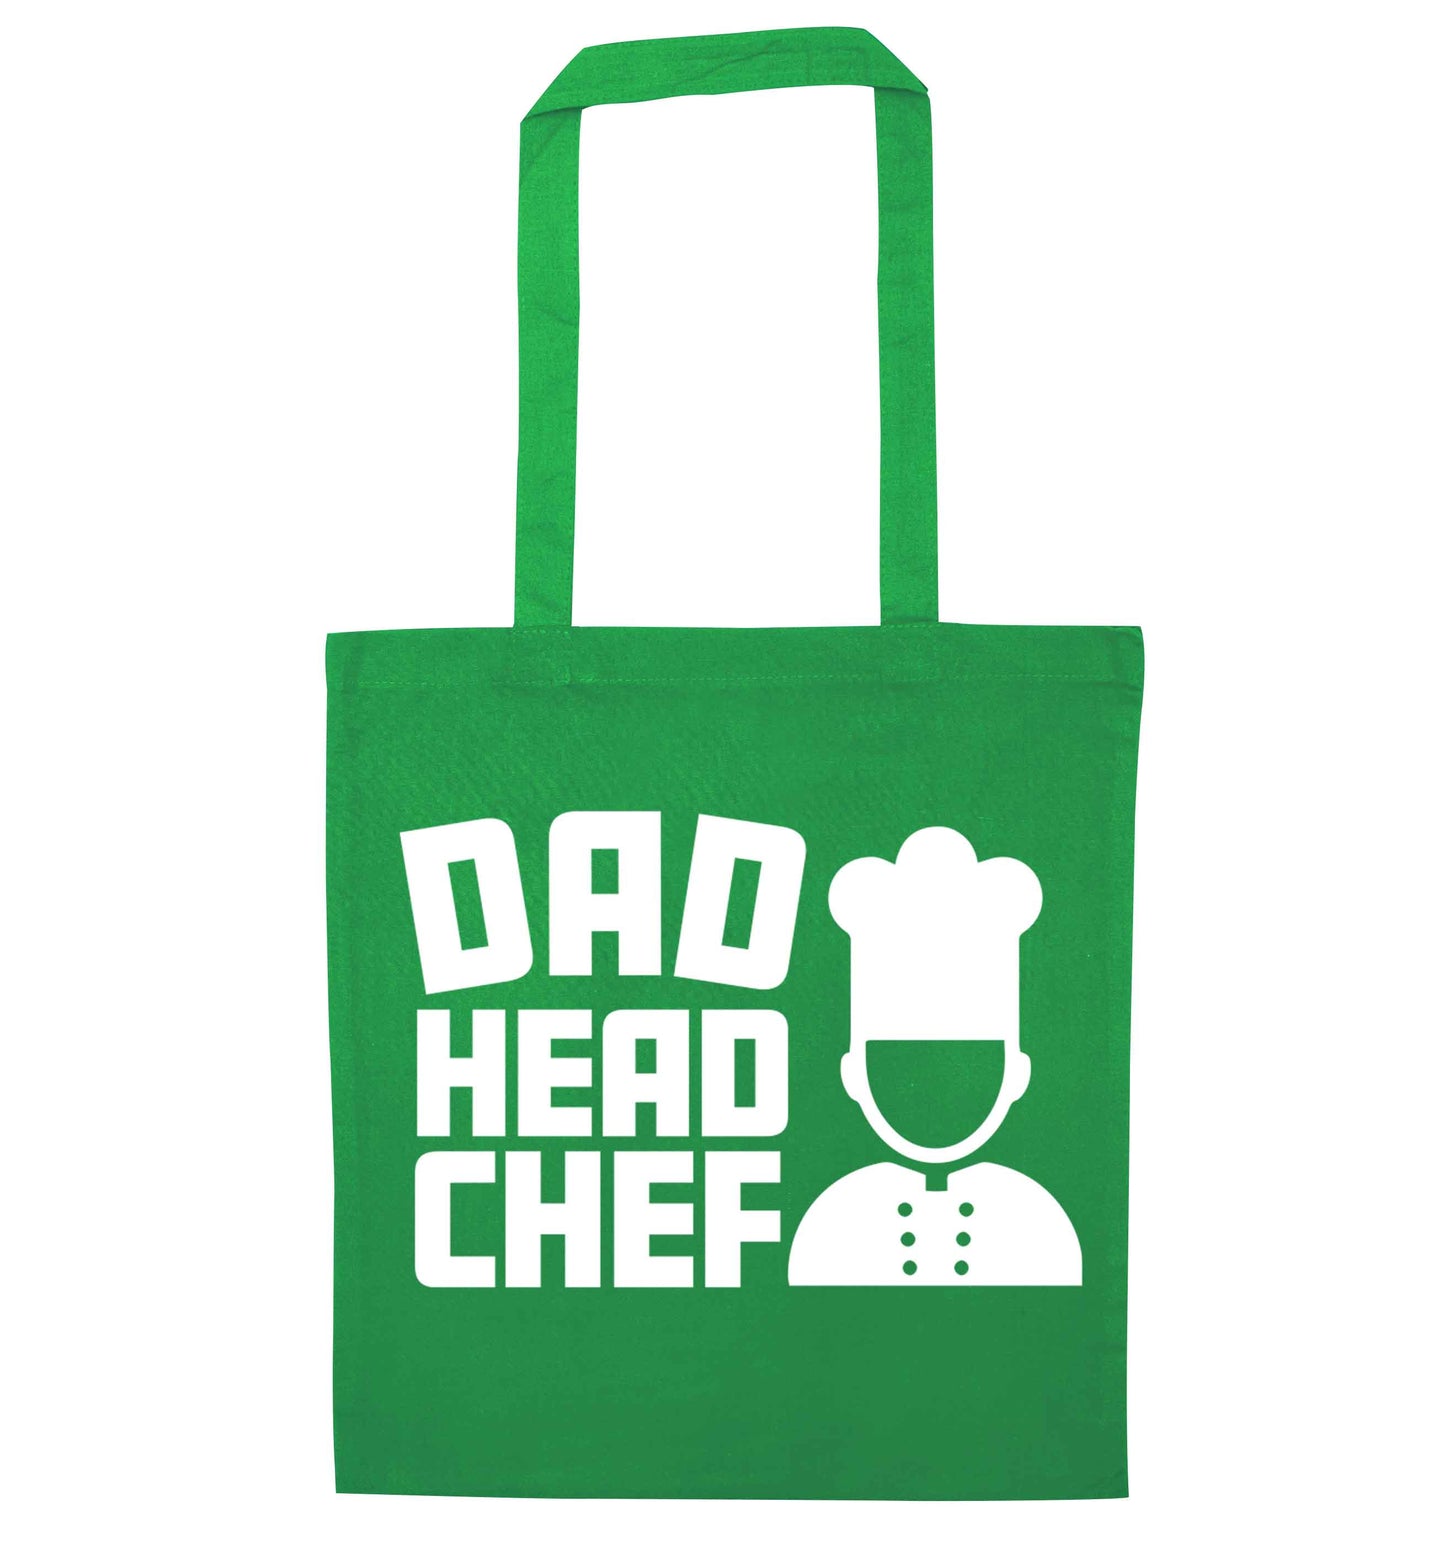 Dad head chef green tote bag